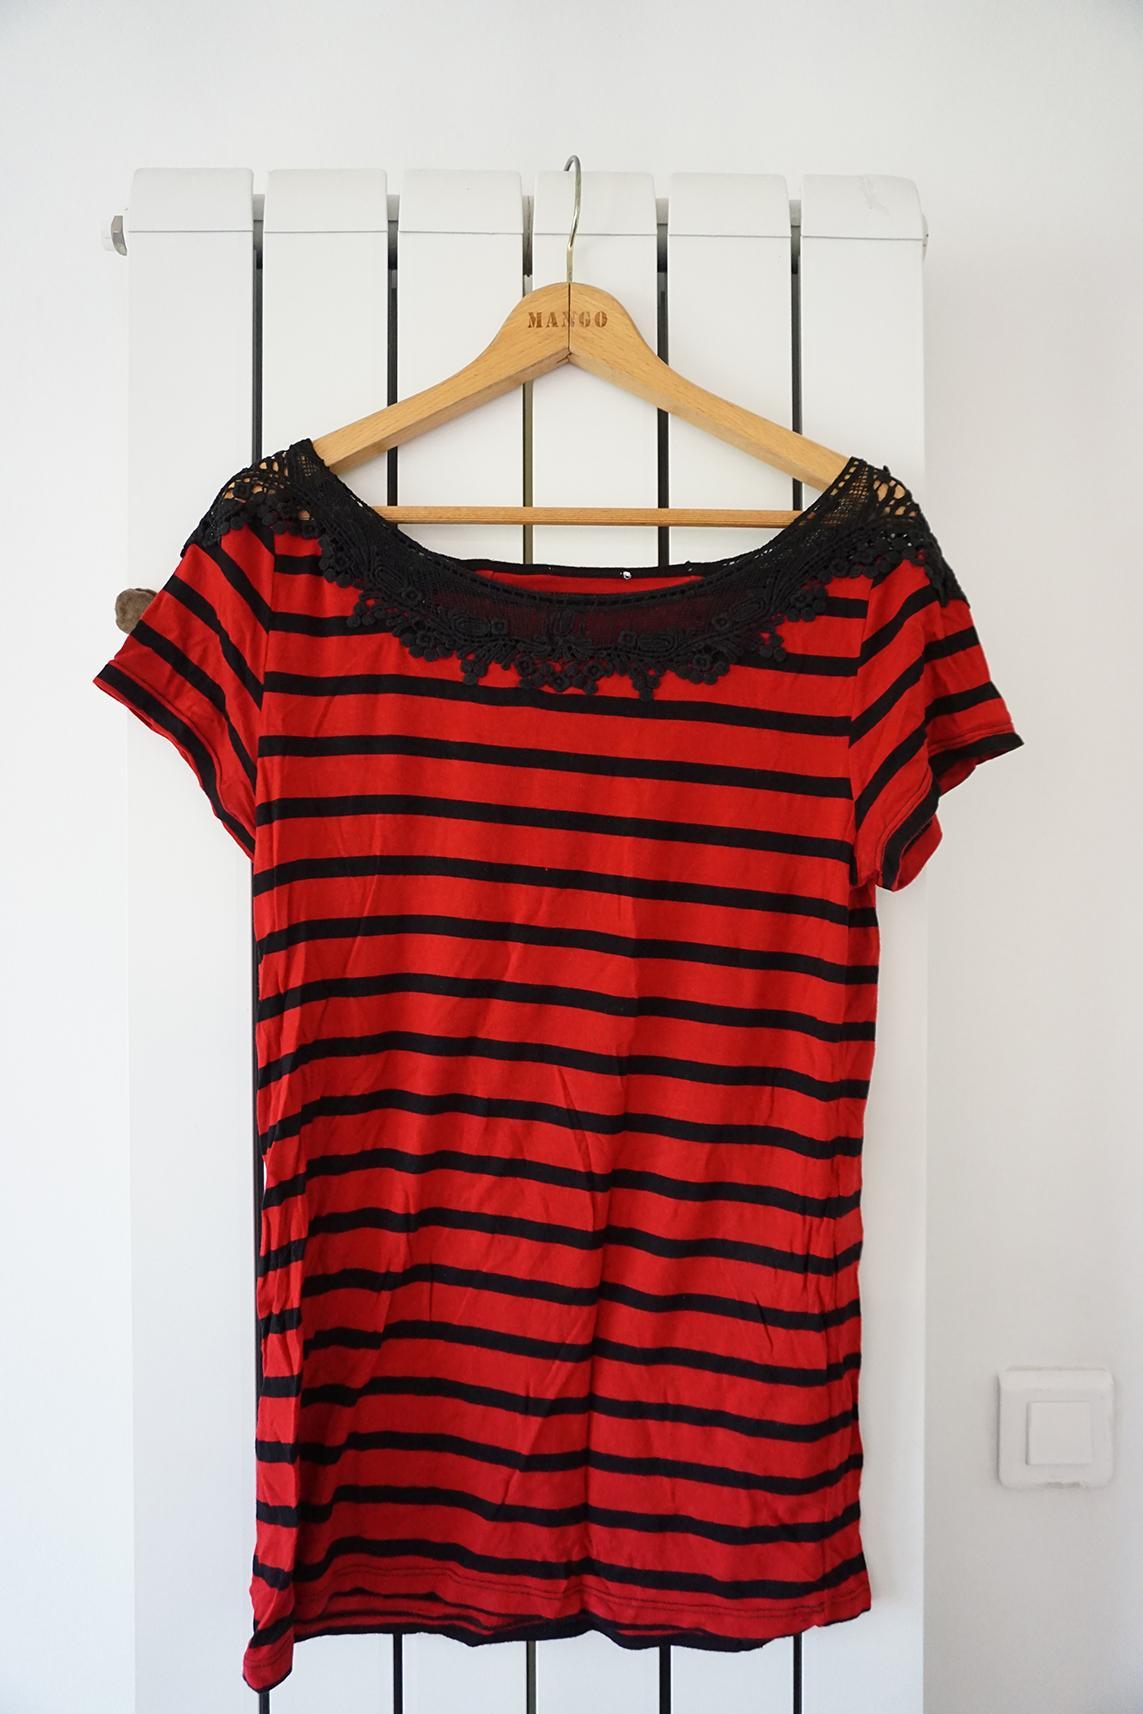 troc de troc joli t-shirt rayure rouge & noir & dentelle image 0